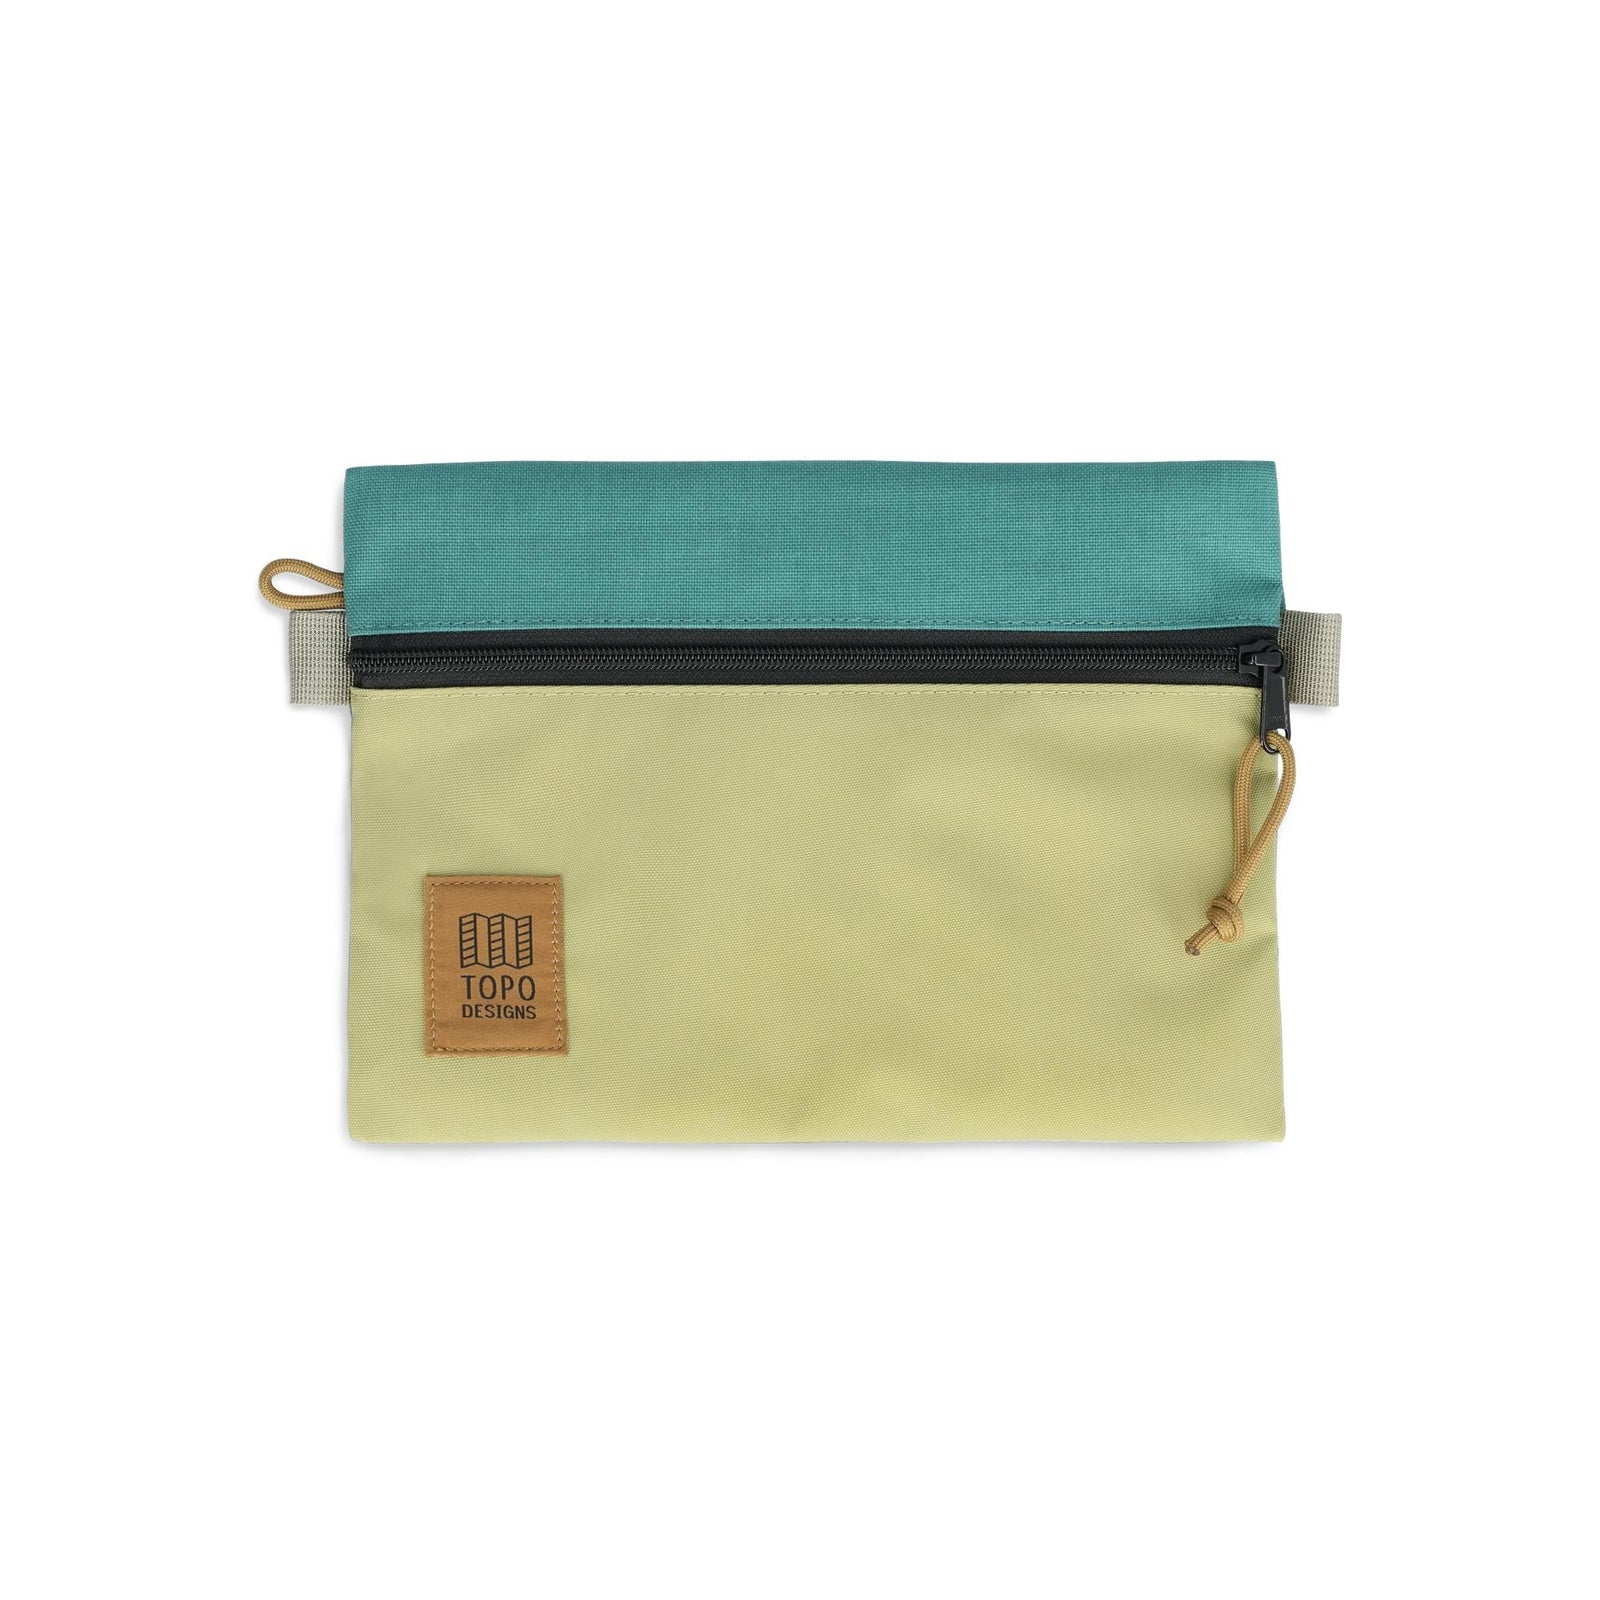 Topo Designs Accessory Bag "Medium" in "Caribbean / Moss""